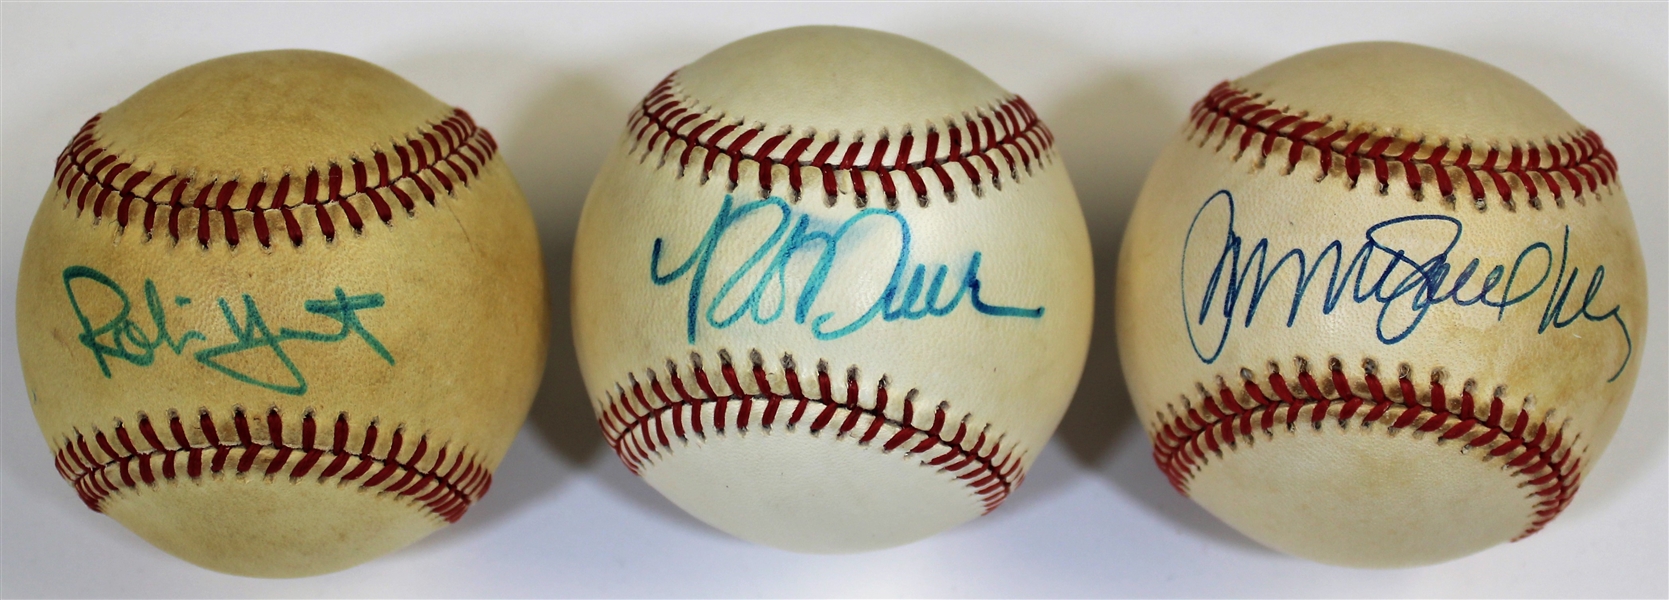 Robin Yount - Rob Deer- Ryne Sandberg Signed Baseballs - JSA